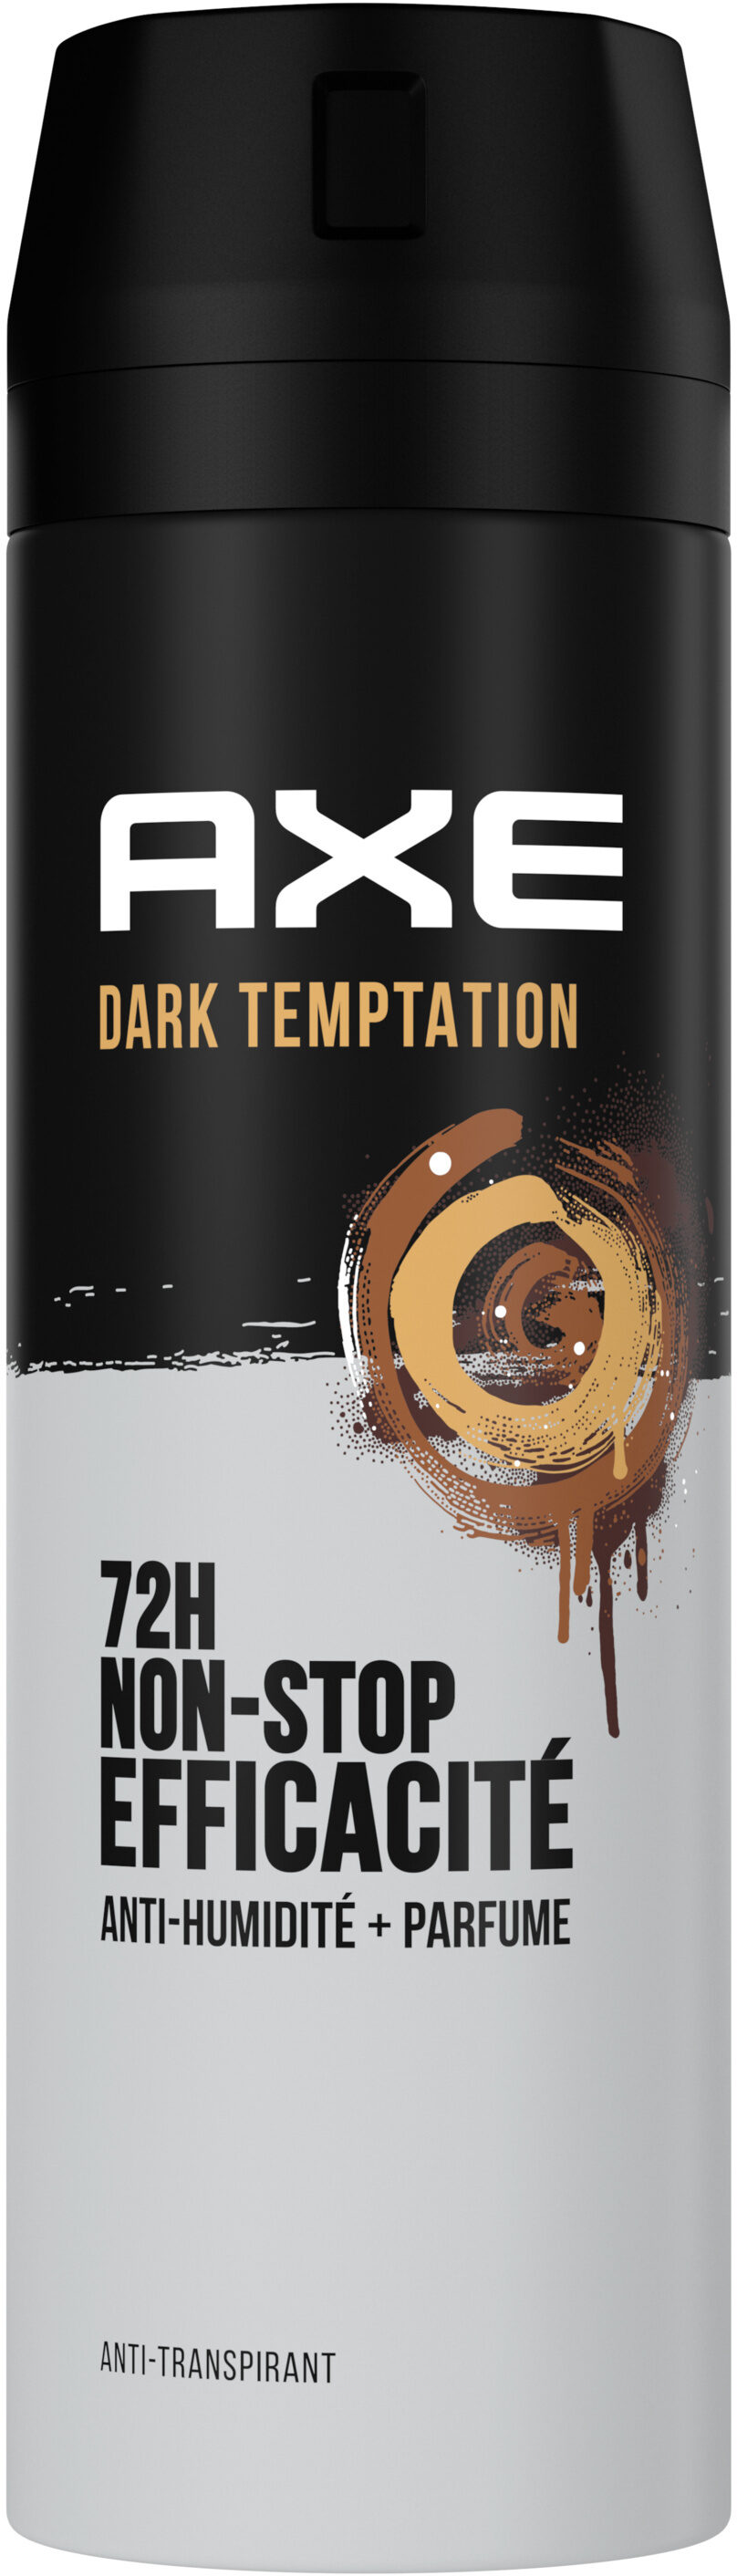 AXE Anti-Transpirant Homme Dark Temptation 72h Anti-Humidité 200ml - Produit - fr